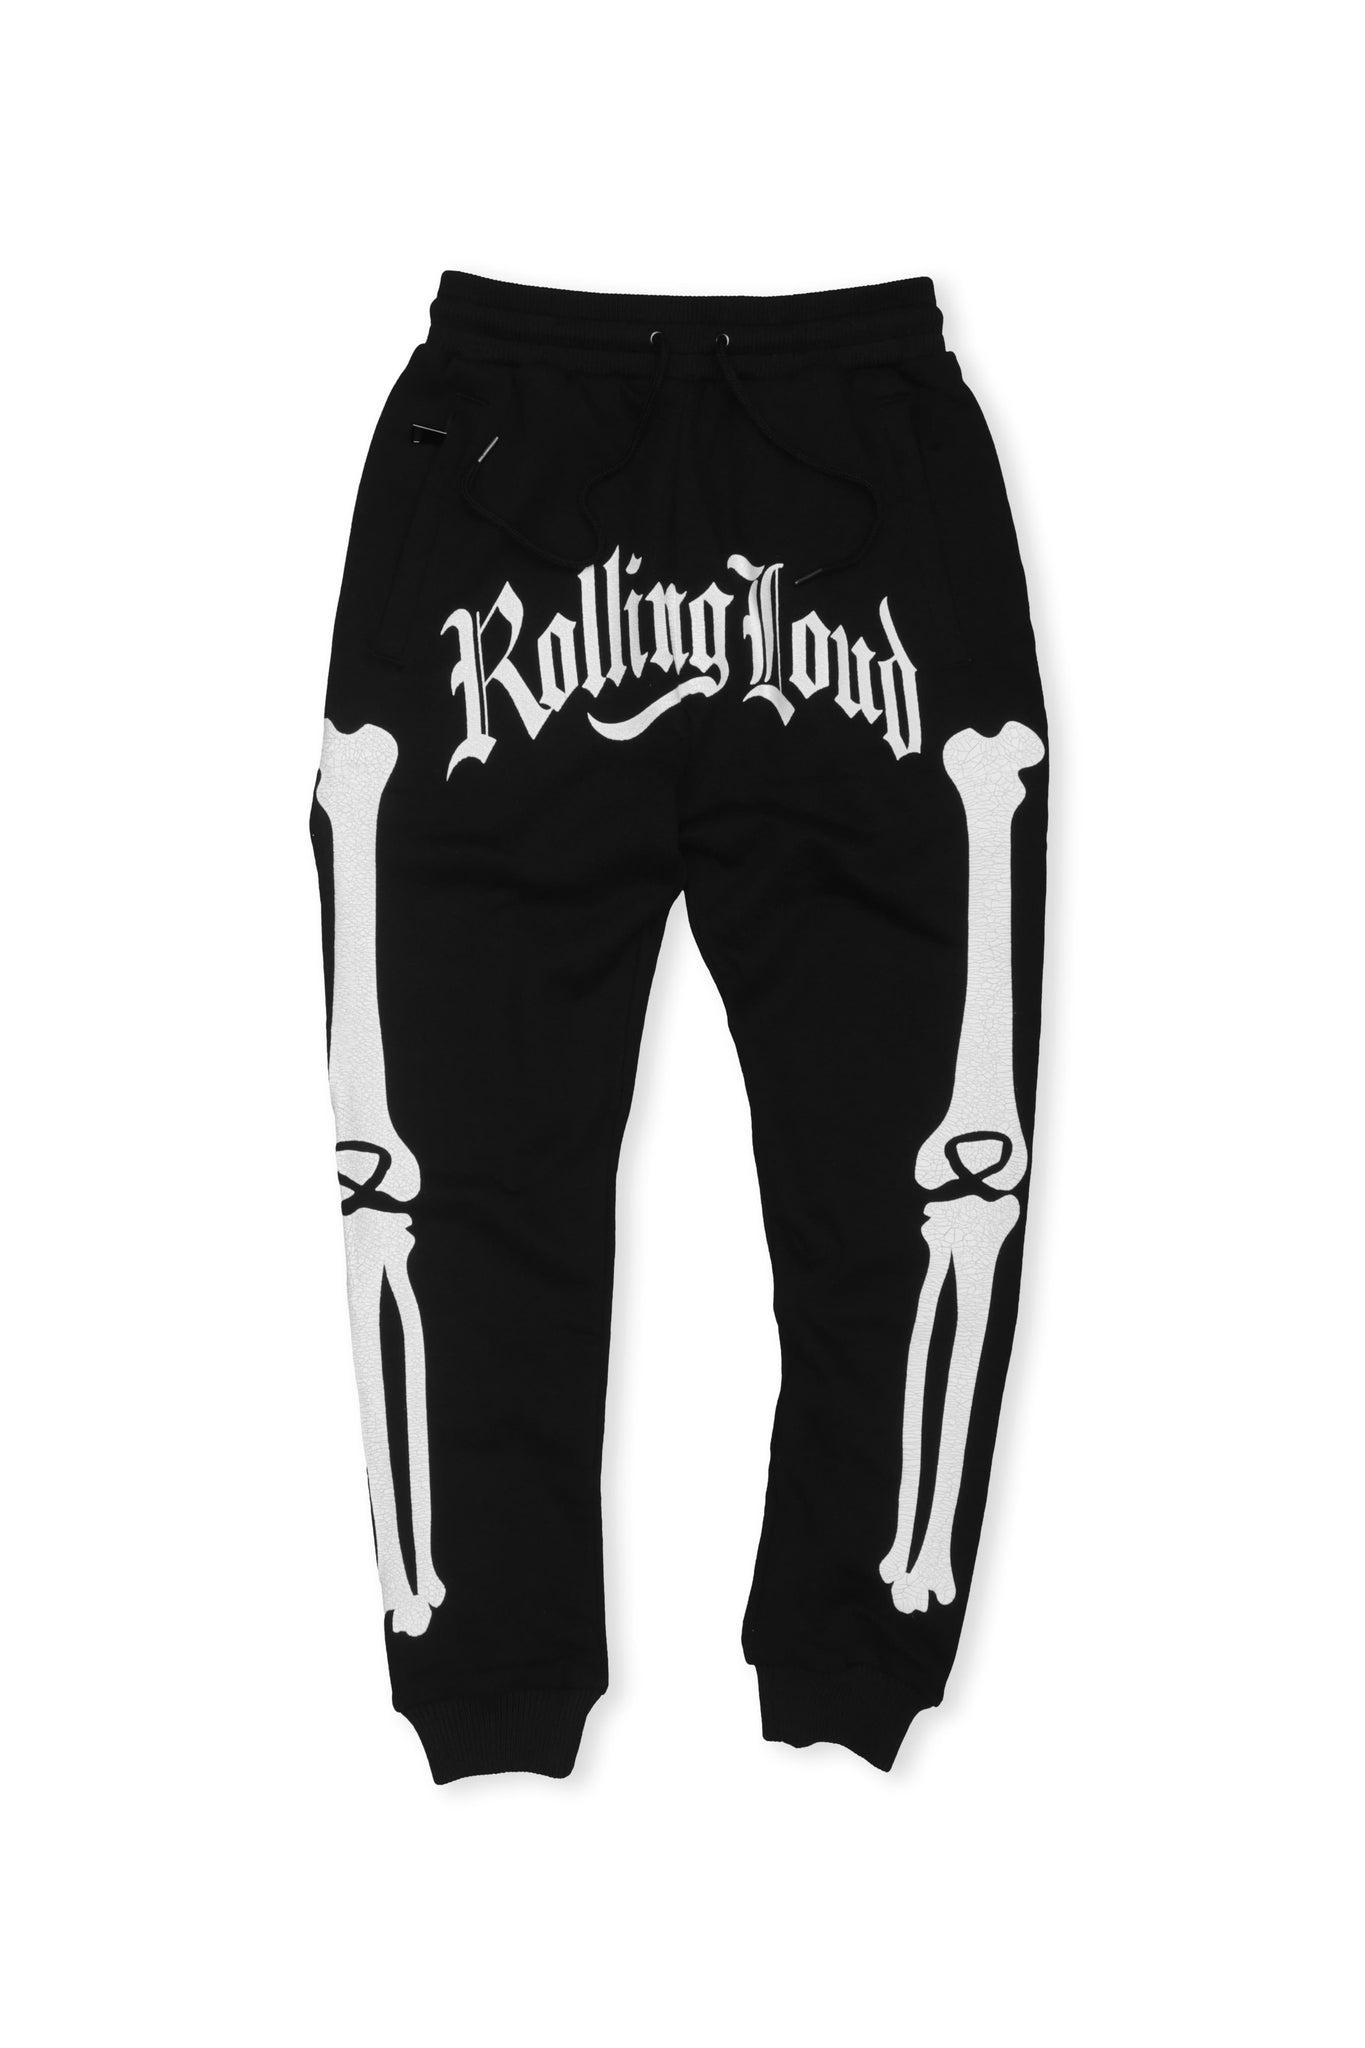 Bones Pants – Rolling Loud